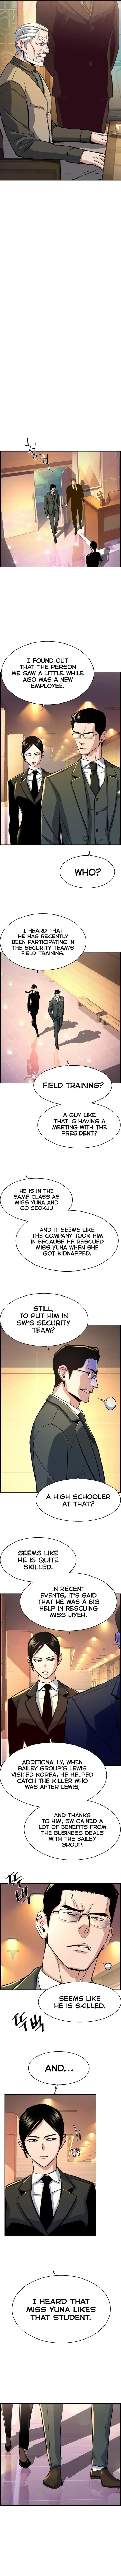 South Korean Mercenary Comic